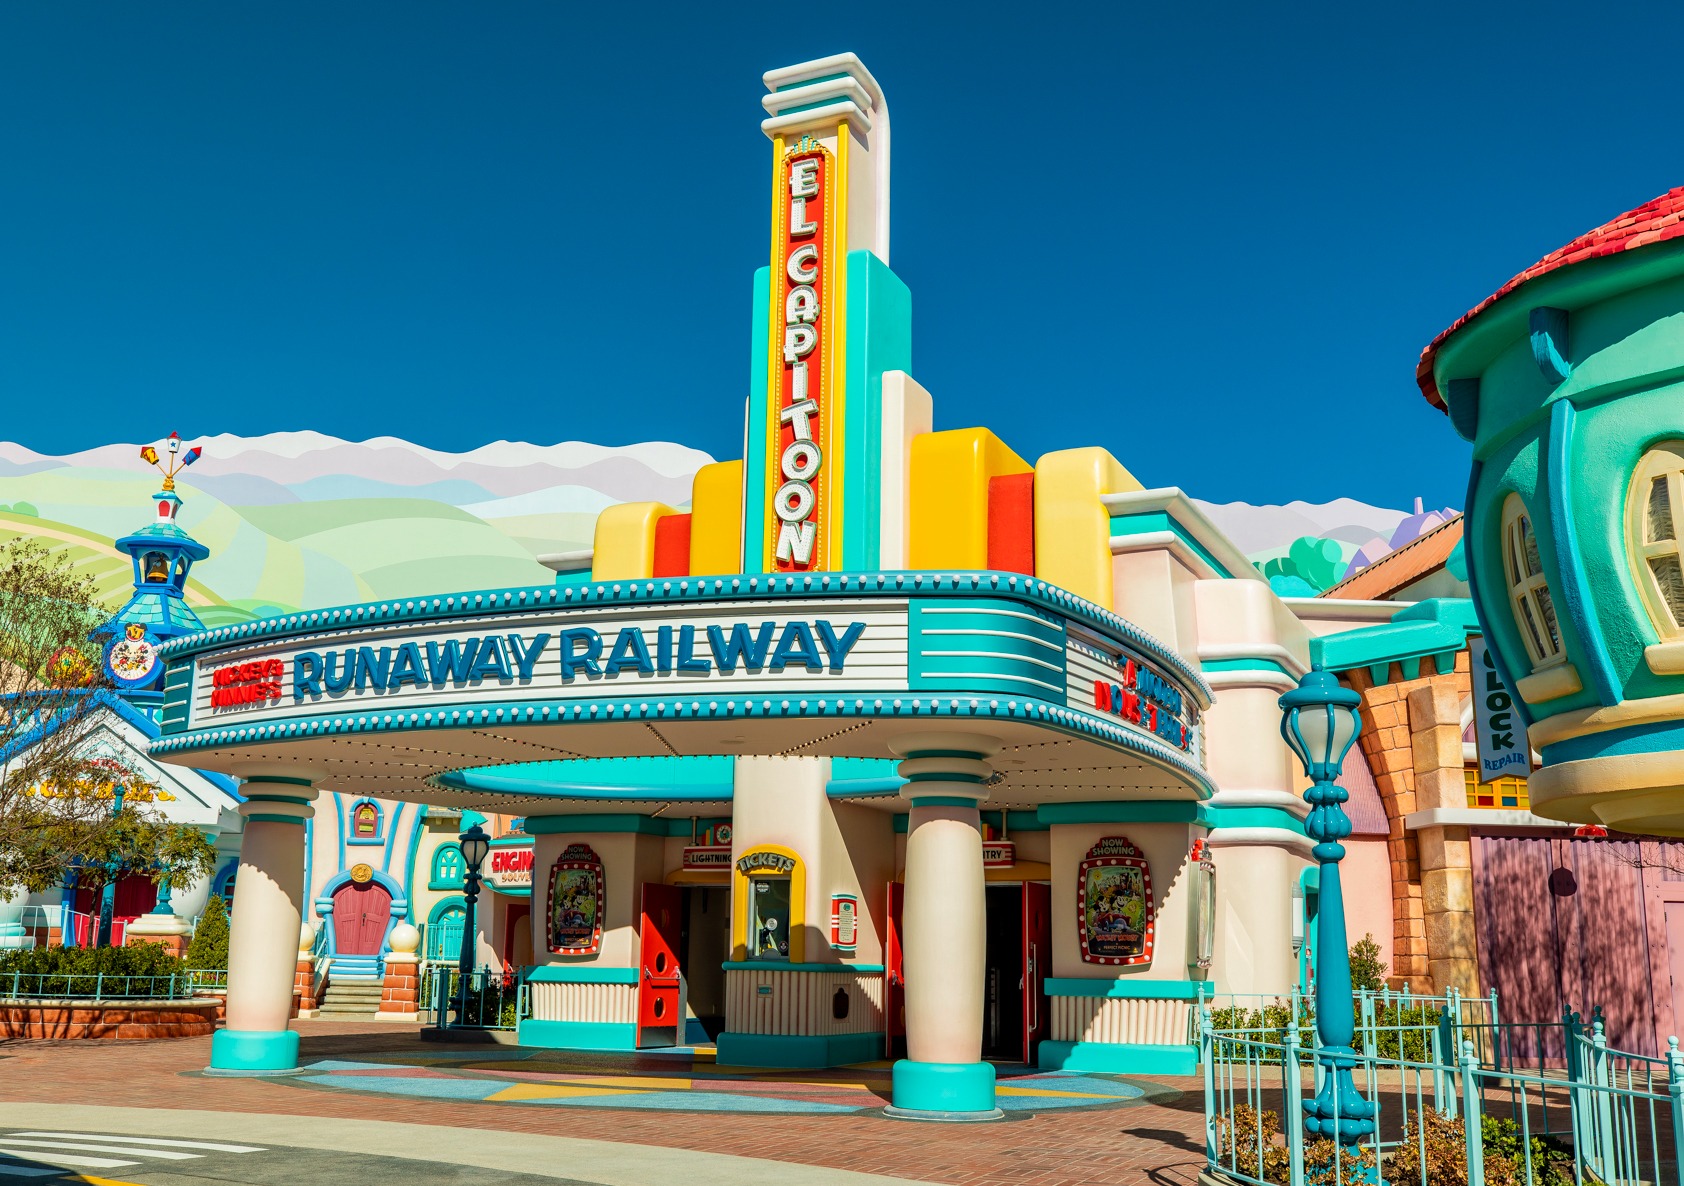 Mickey and Minnie’s Runaway Railway Poster